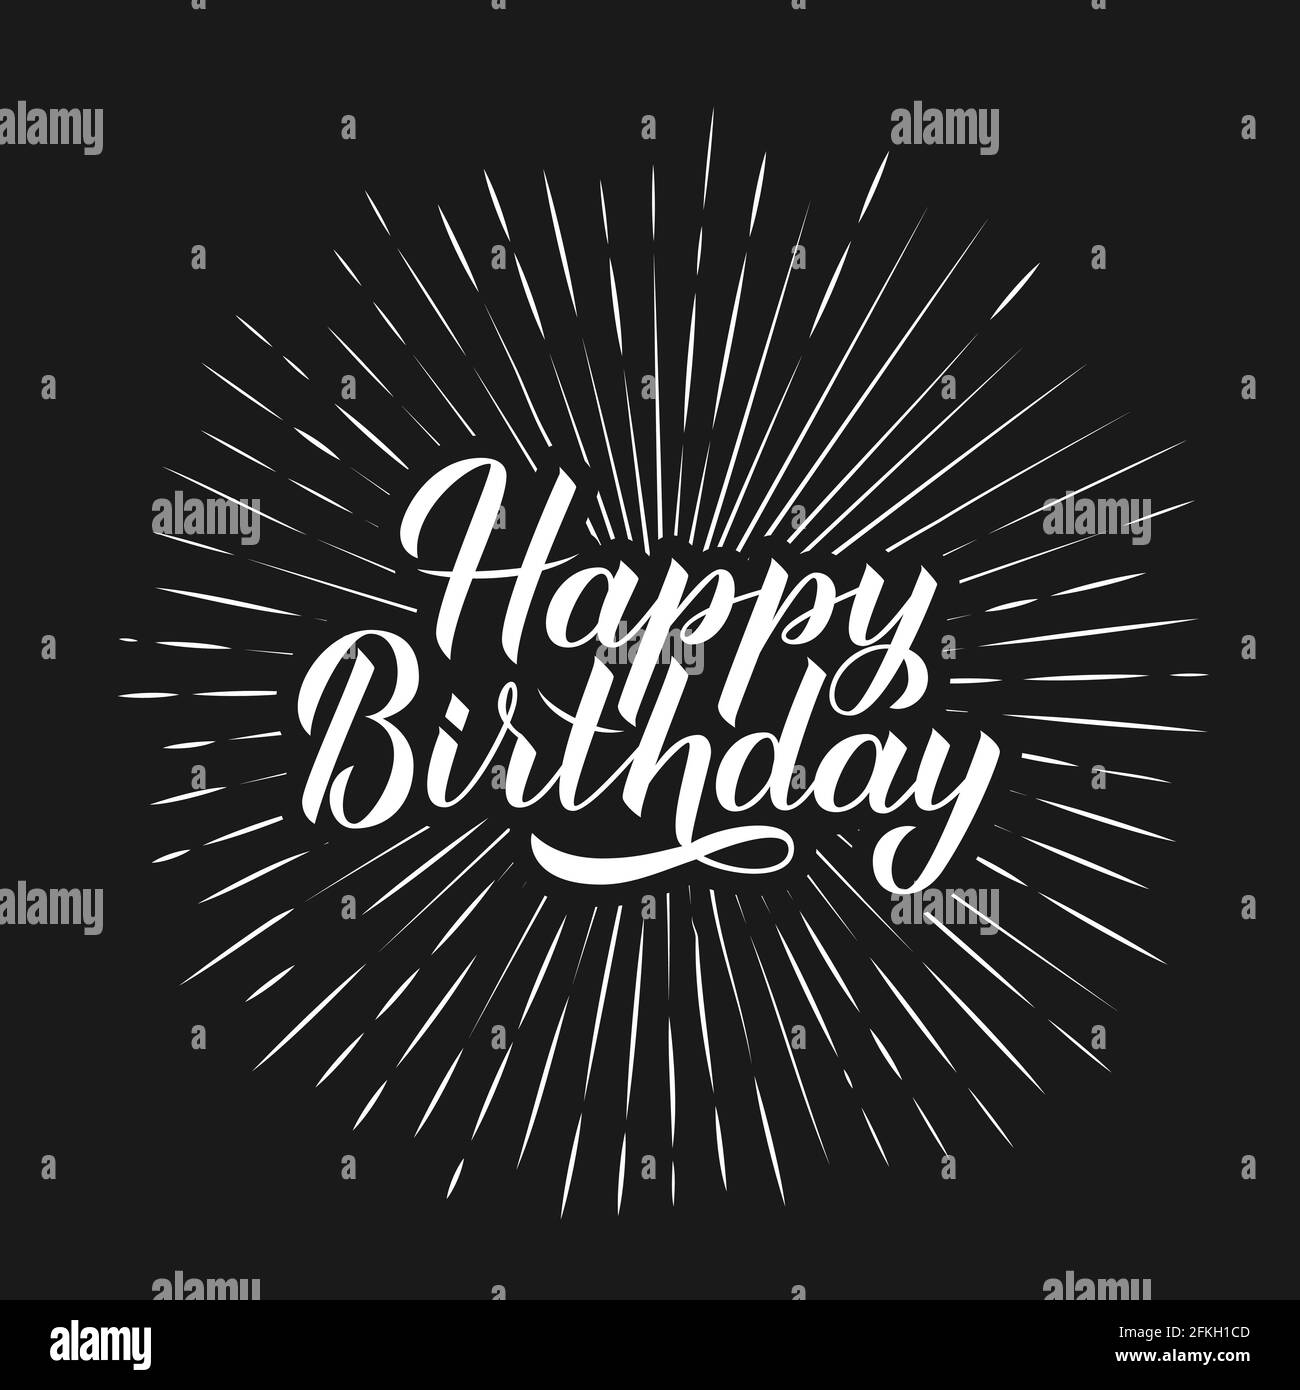 Car happy birthday Black and White Stock Photos & Images - Alamy